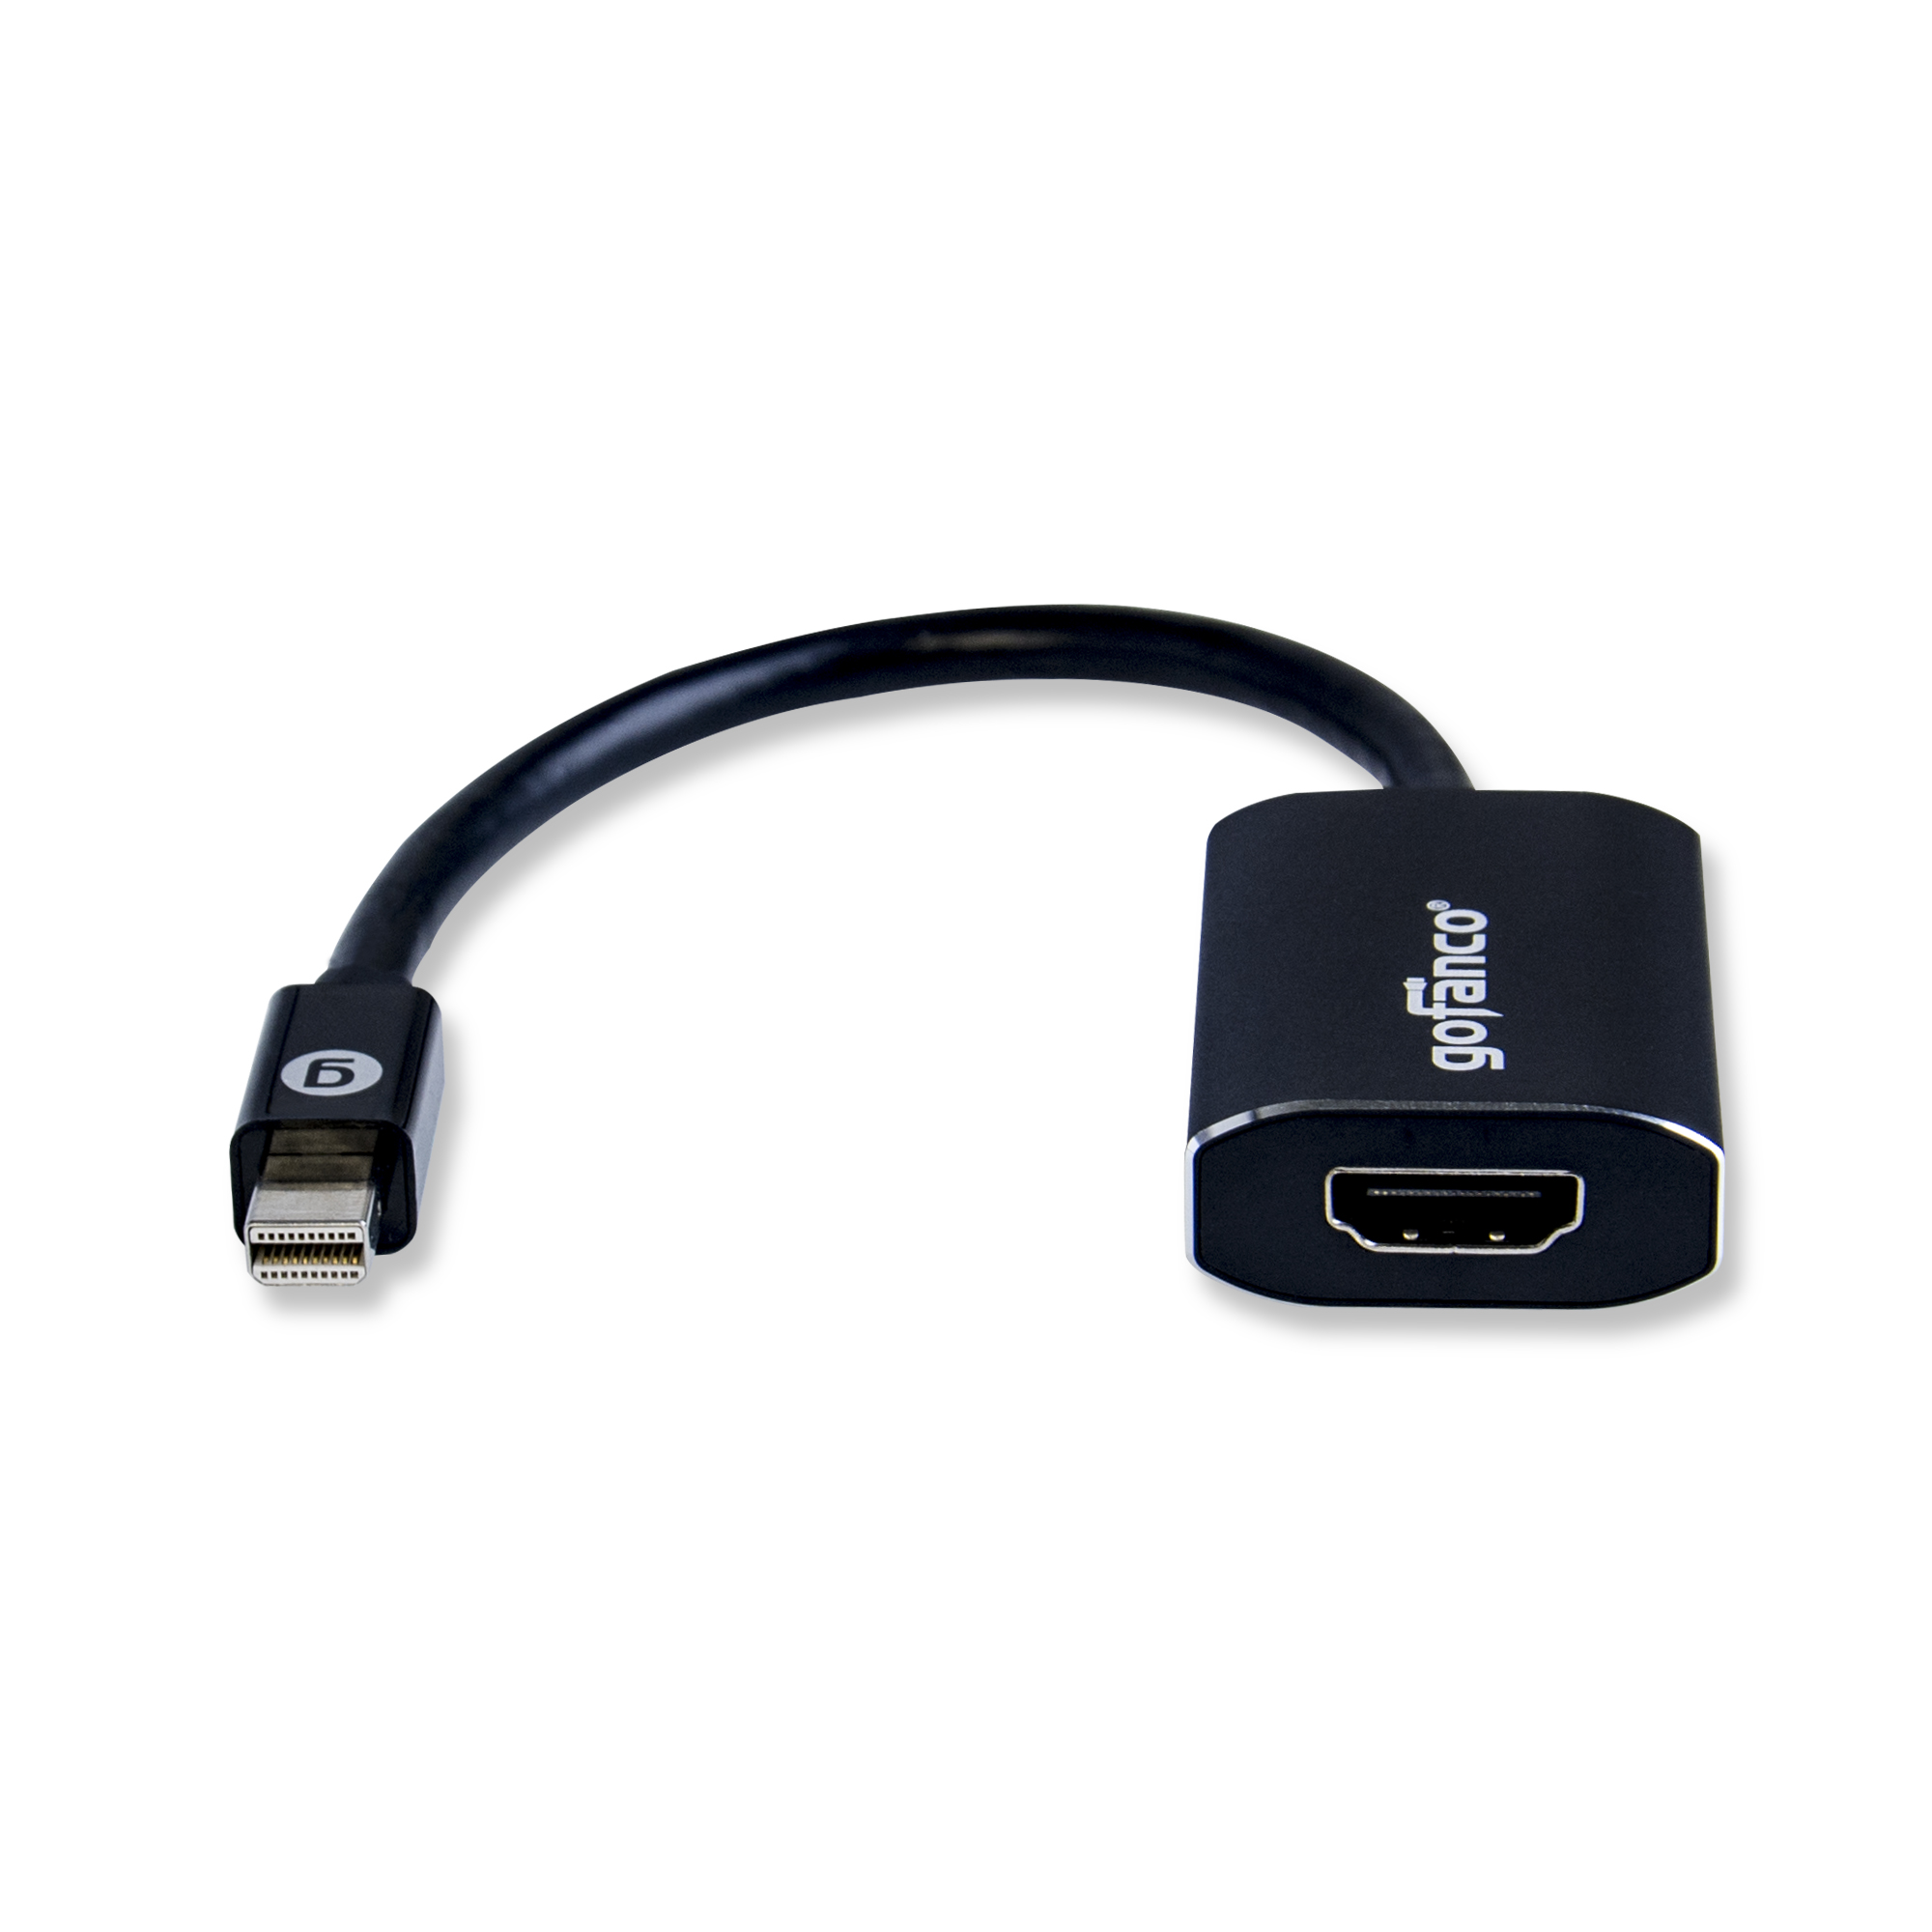 Active Mini DisplayPort 1.2 to HDMI 2.0 Adapter |